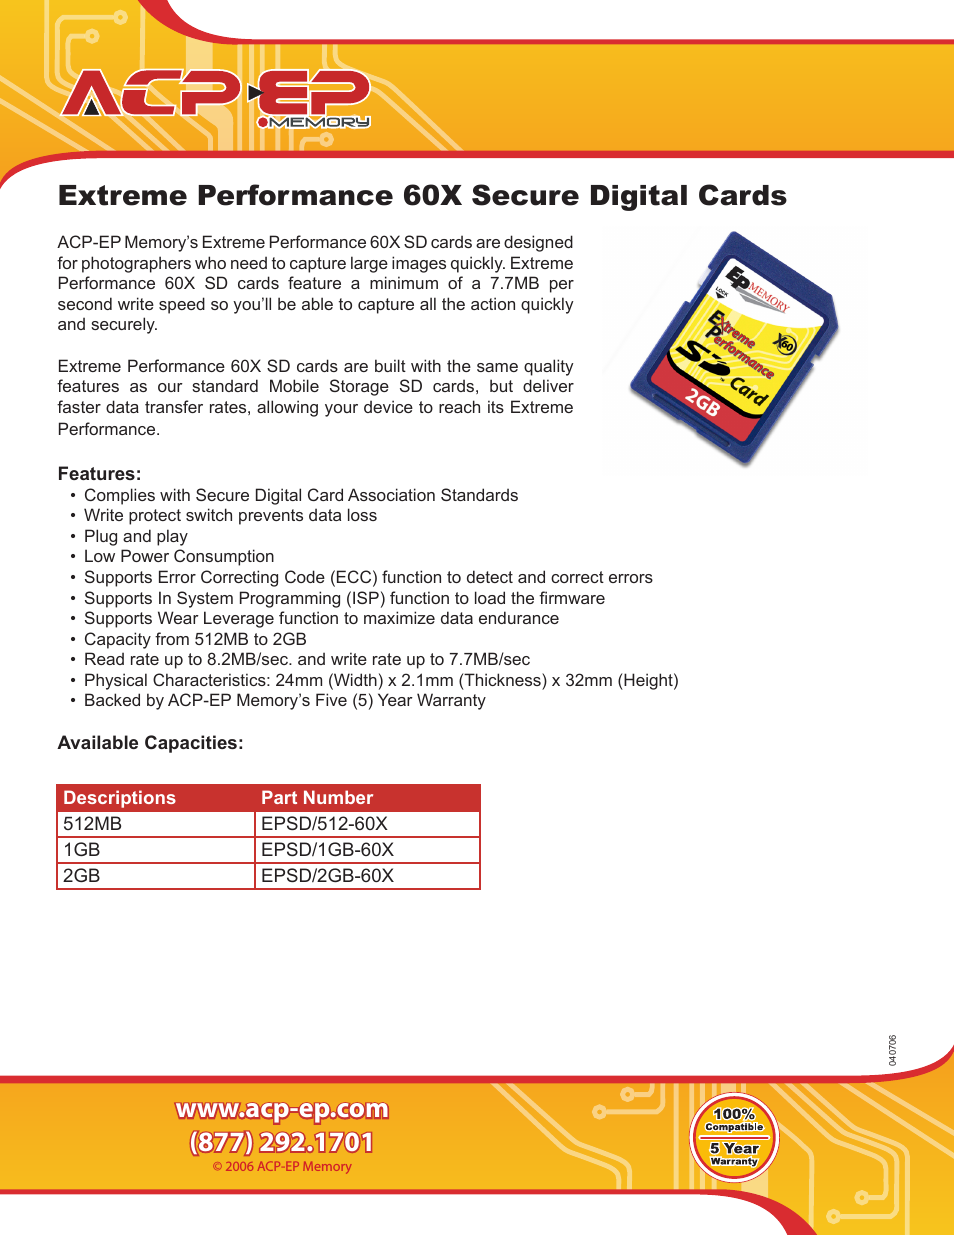 Extreme Performance EPSD/1GB-60X